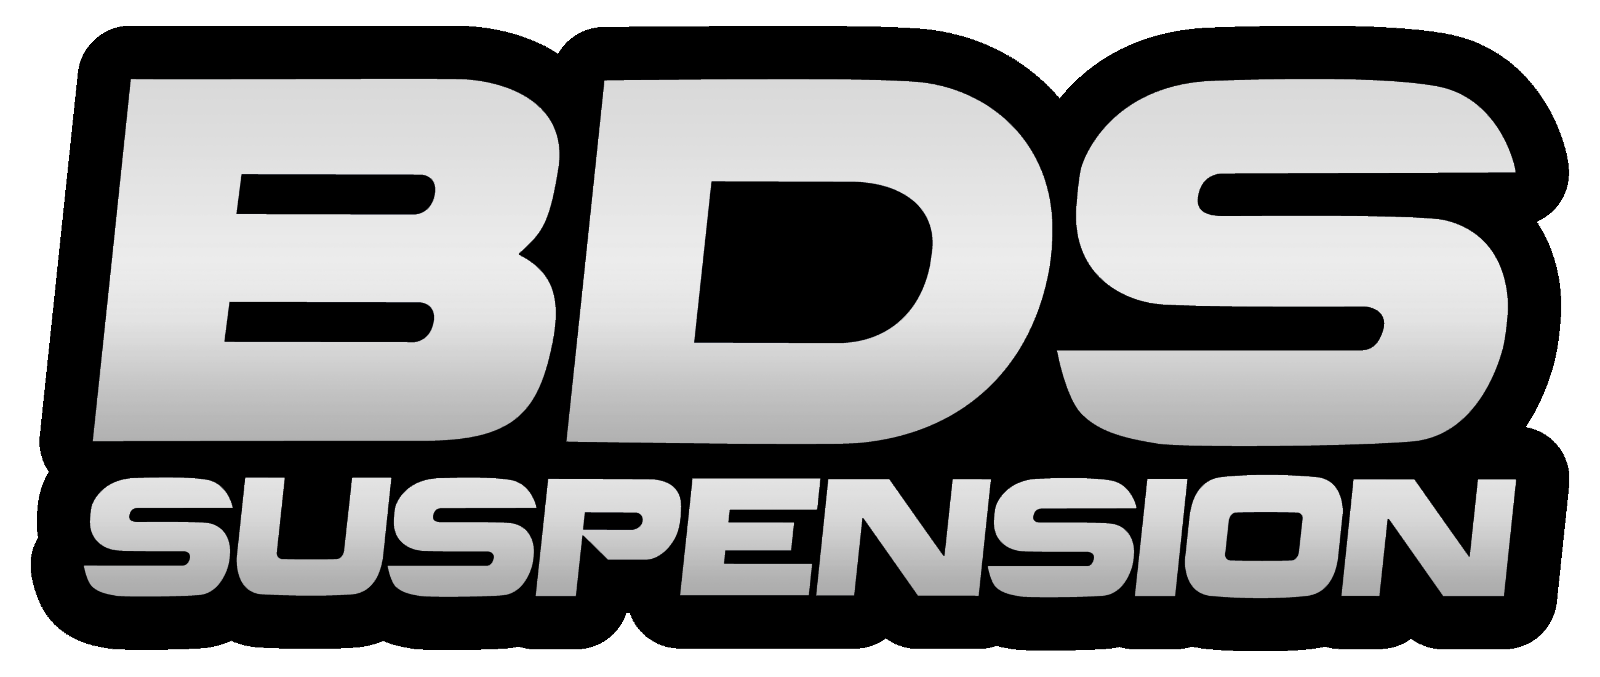 BDS BDS732FS 6 Inch Lift Kit - Chevy/GMC Suburban- Tahoe- Yukon/XL 1500 (15-19) 4WD